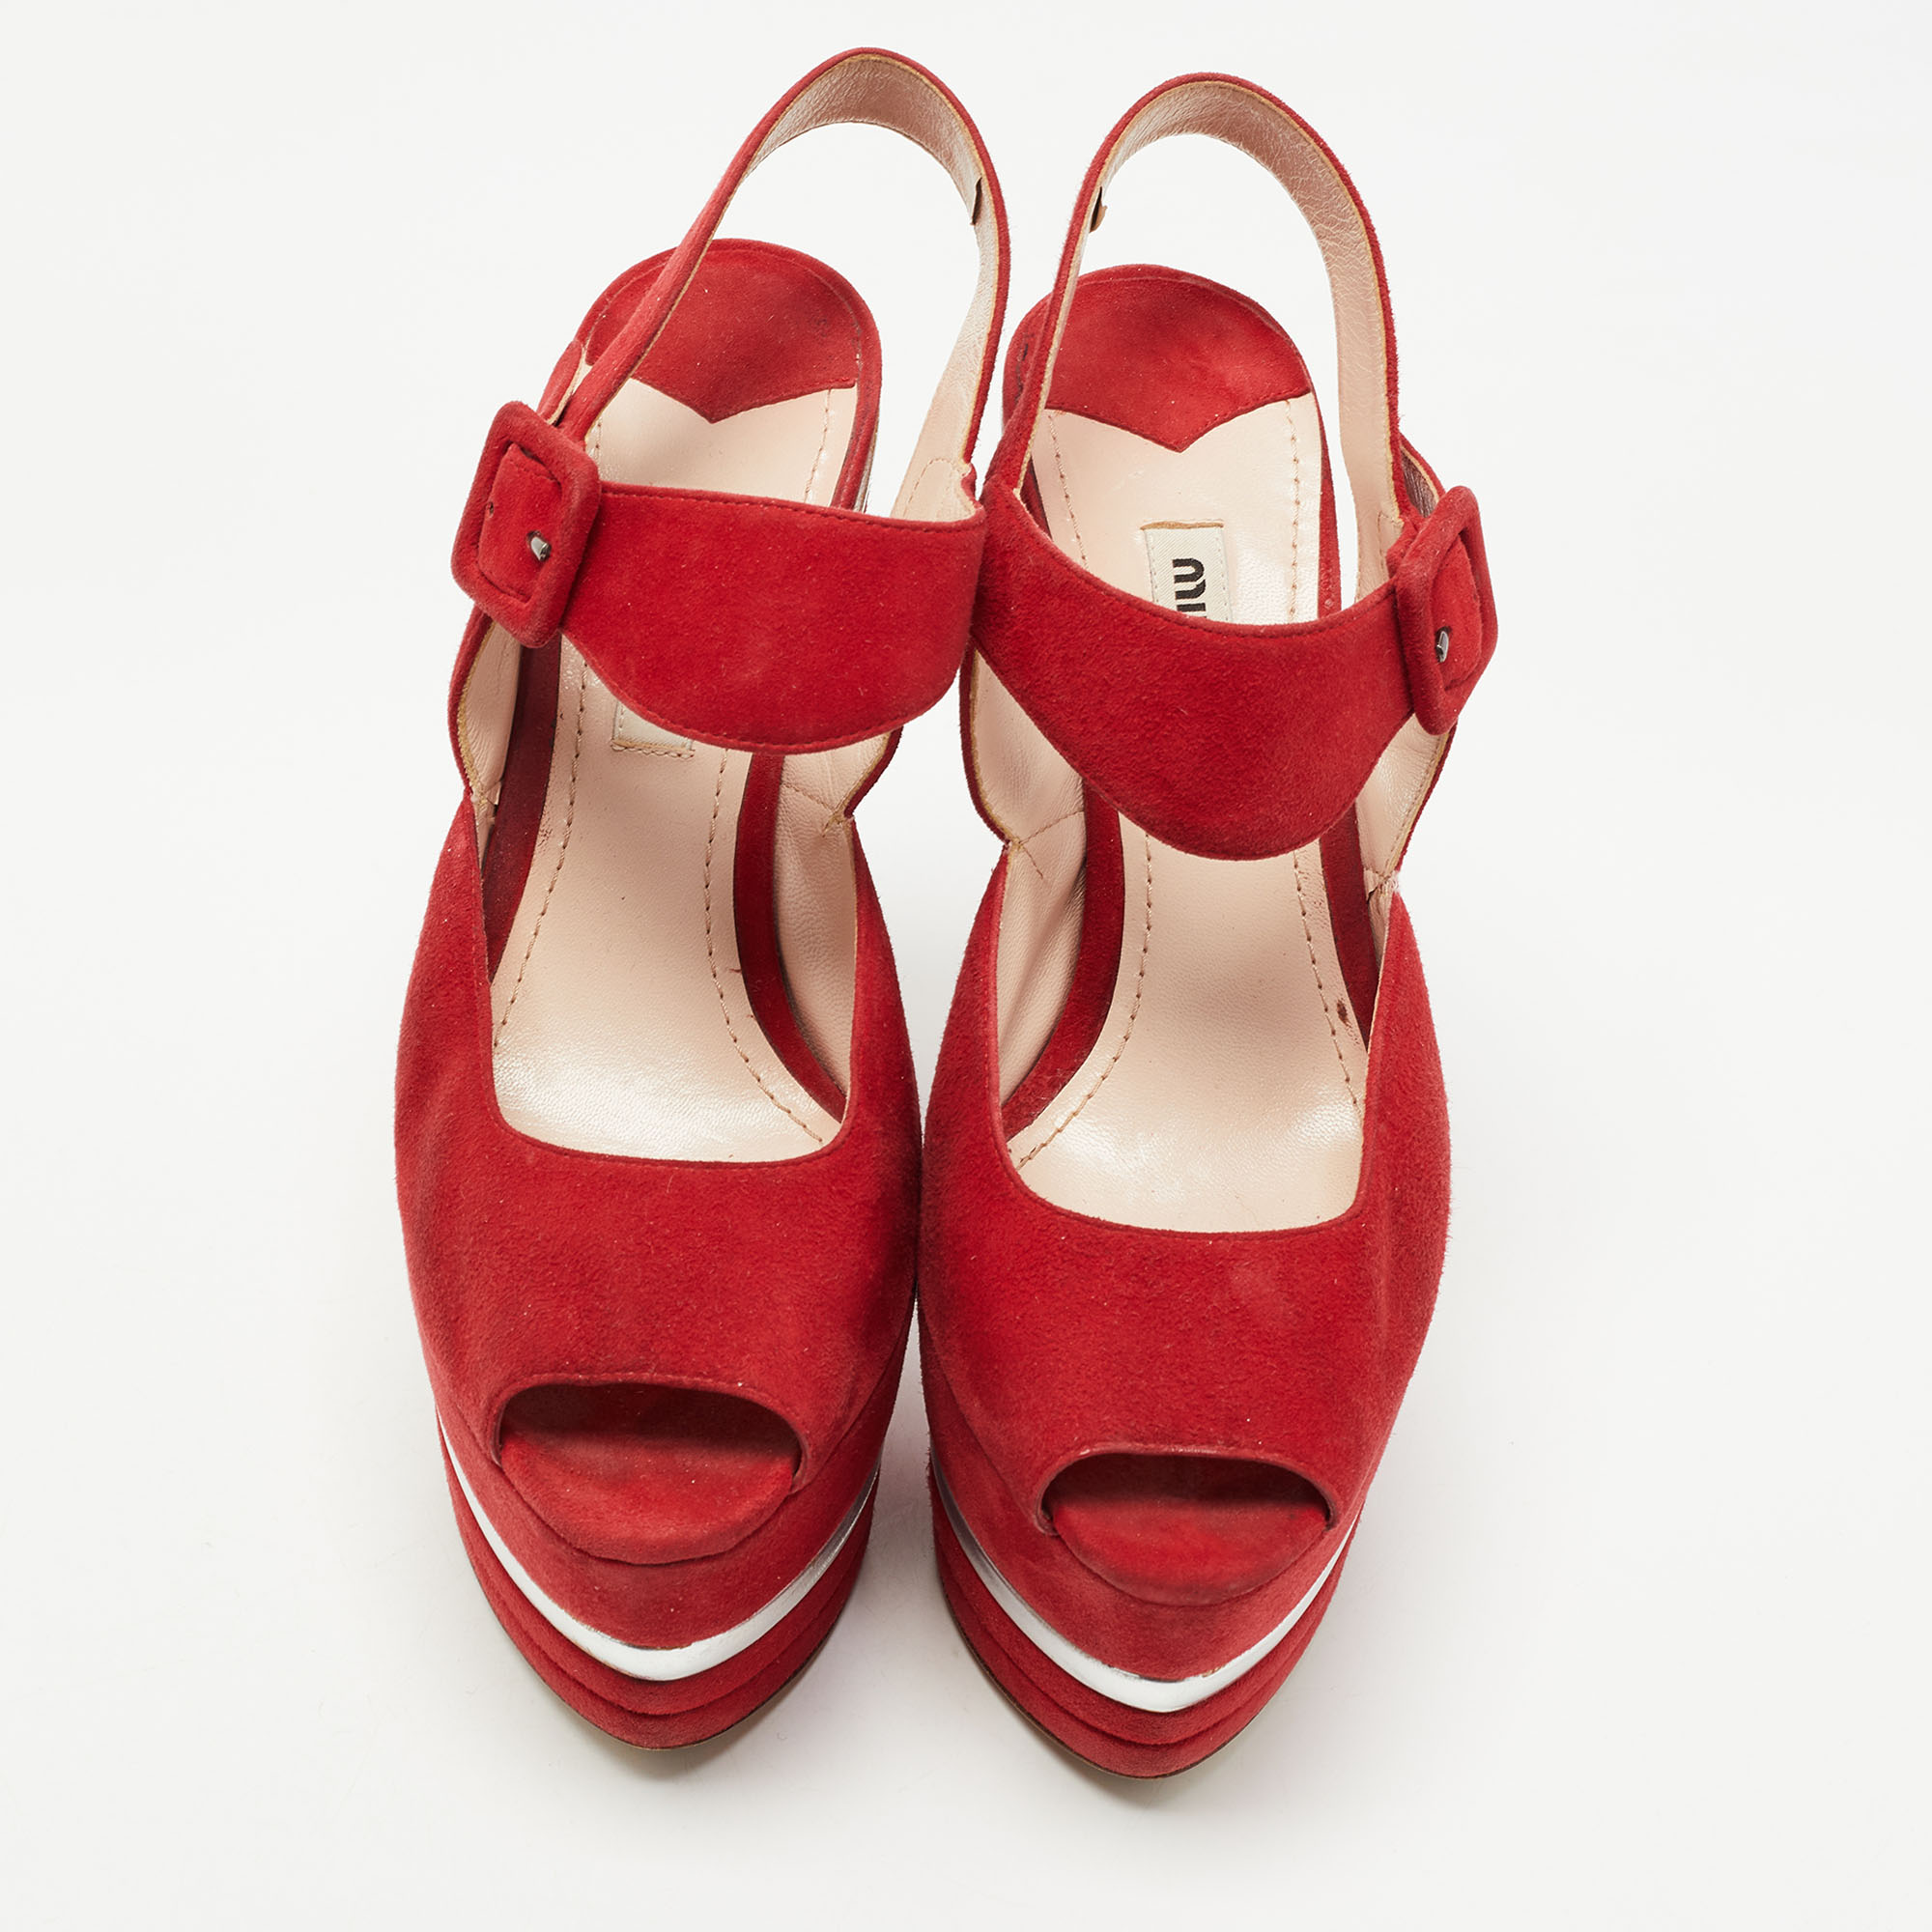 Miu Miu Red Suede Platform Ankle Strap Sandals Size 36